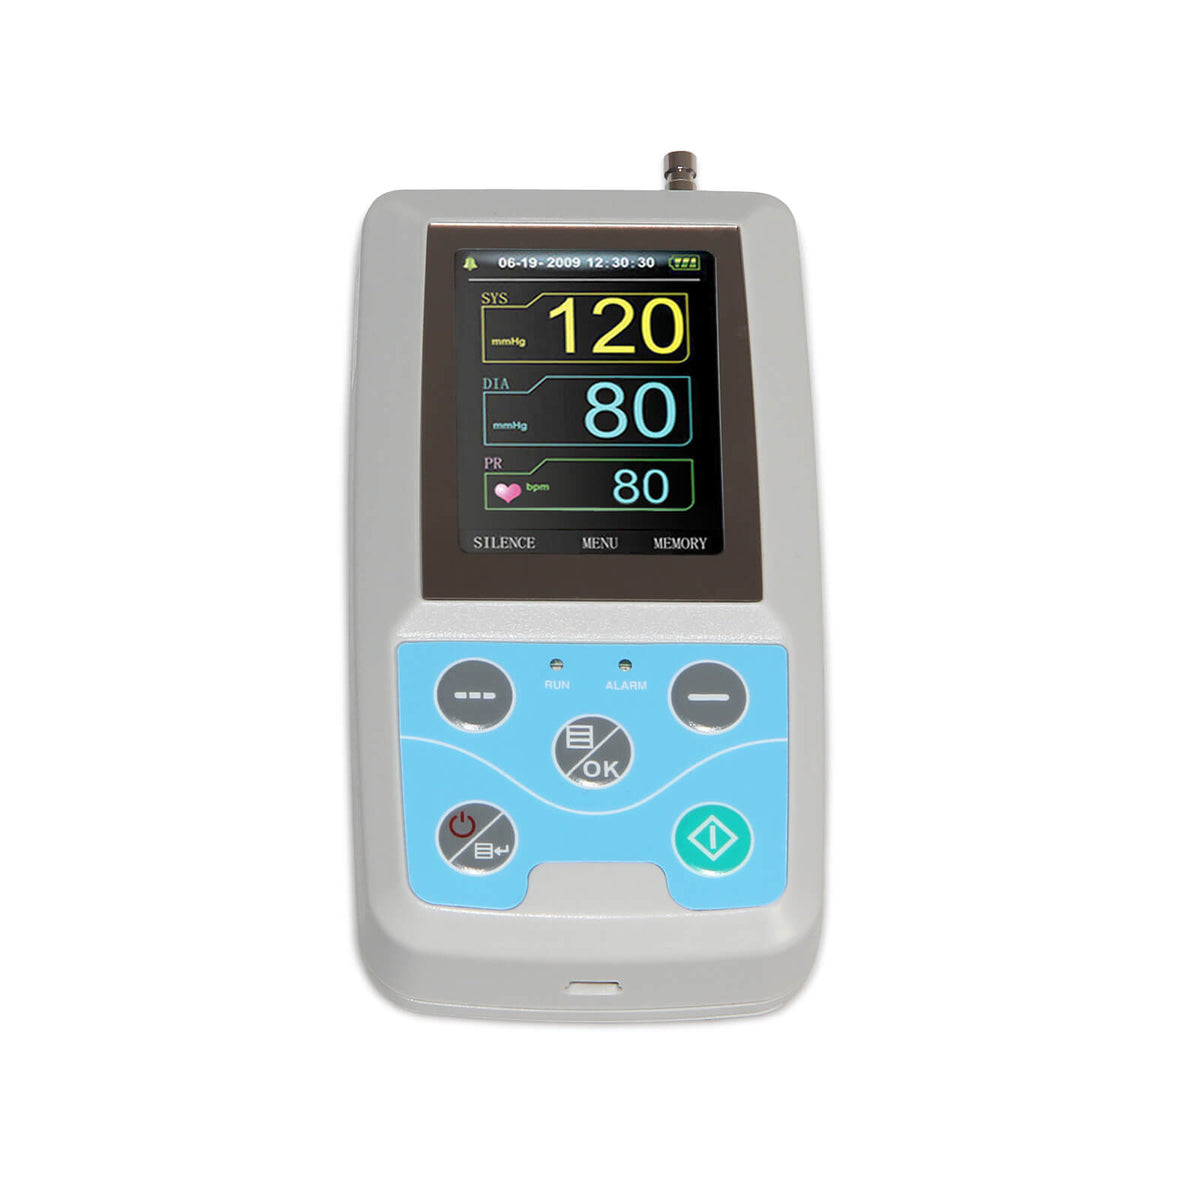 Contec 6 Cuffs Ambulatory Blood Pressure Monitor 24hours NIBP ABPM